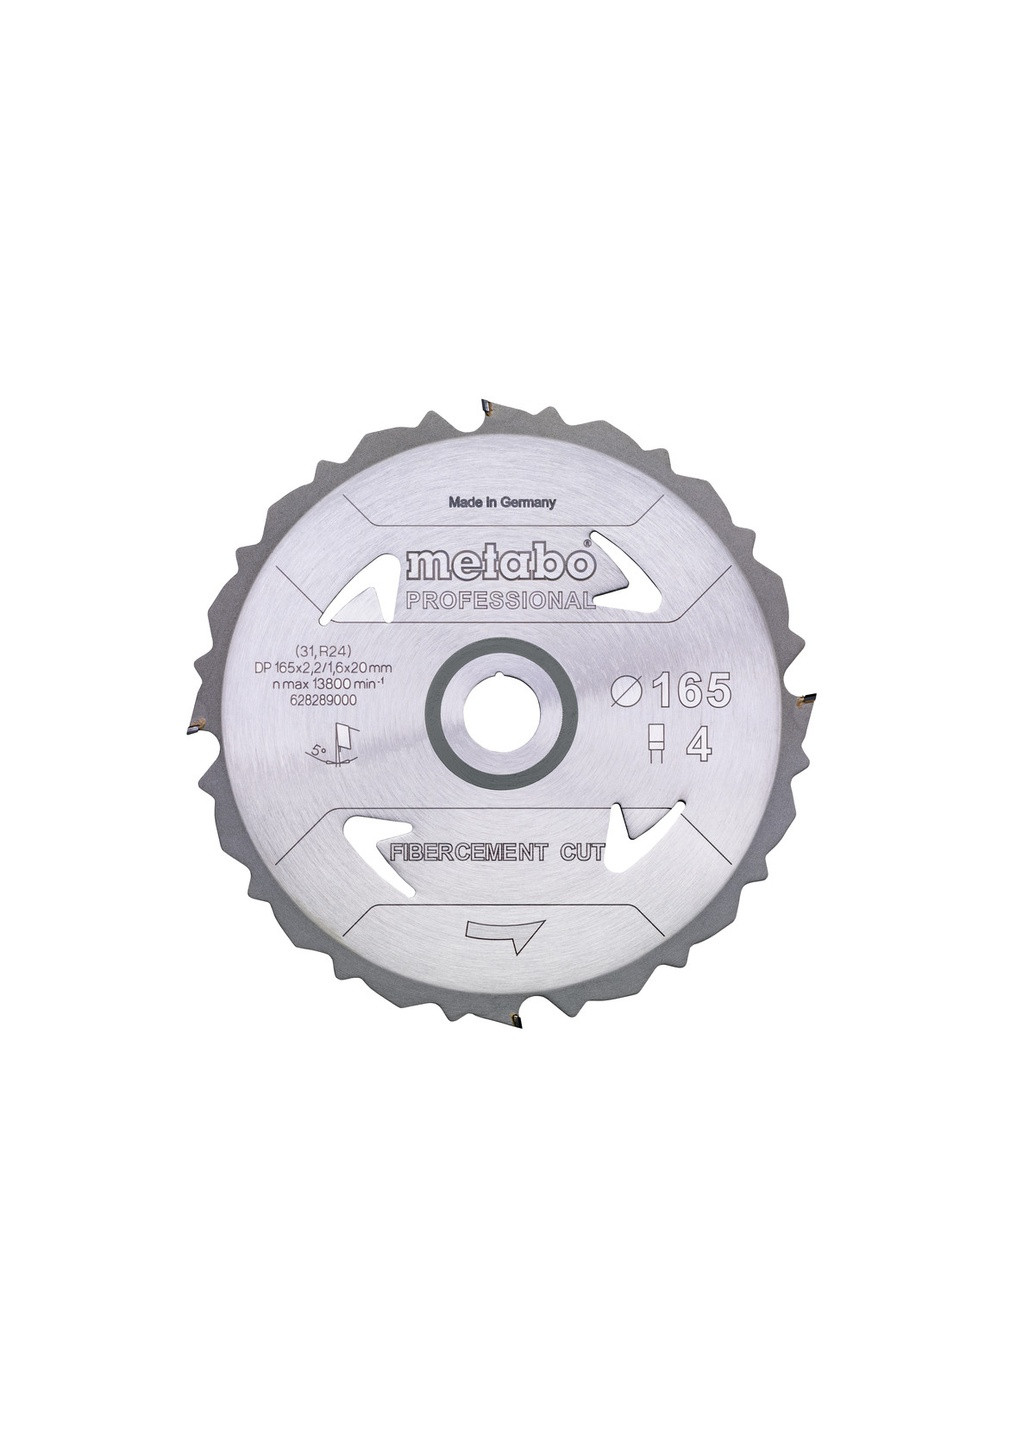 Пильный диск Fibercement Cut Professional 160х2,2х20 мм Z4 FZ 5°, по бетону (Картон) 628287000 (8428) Metabo (267819287)